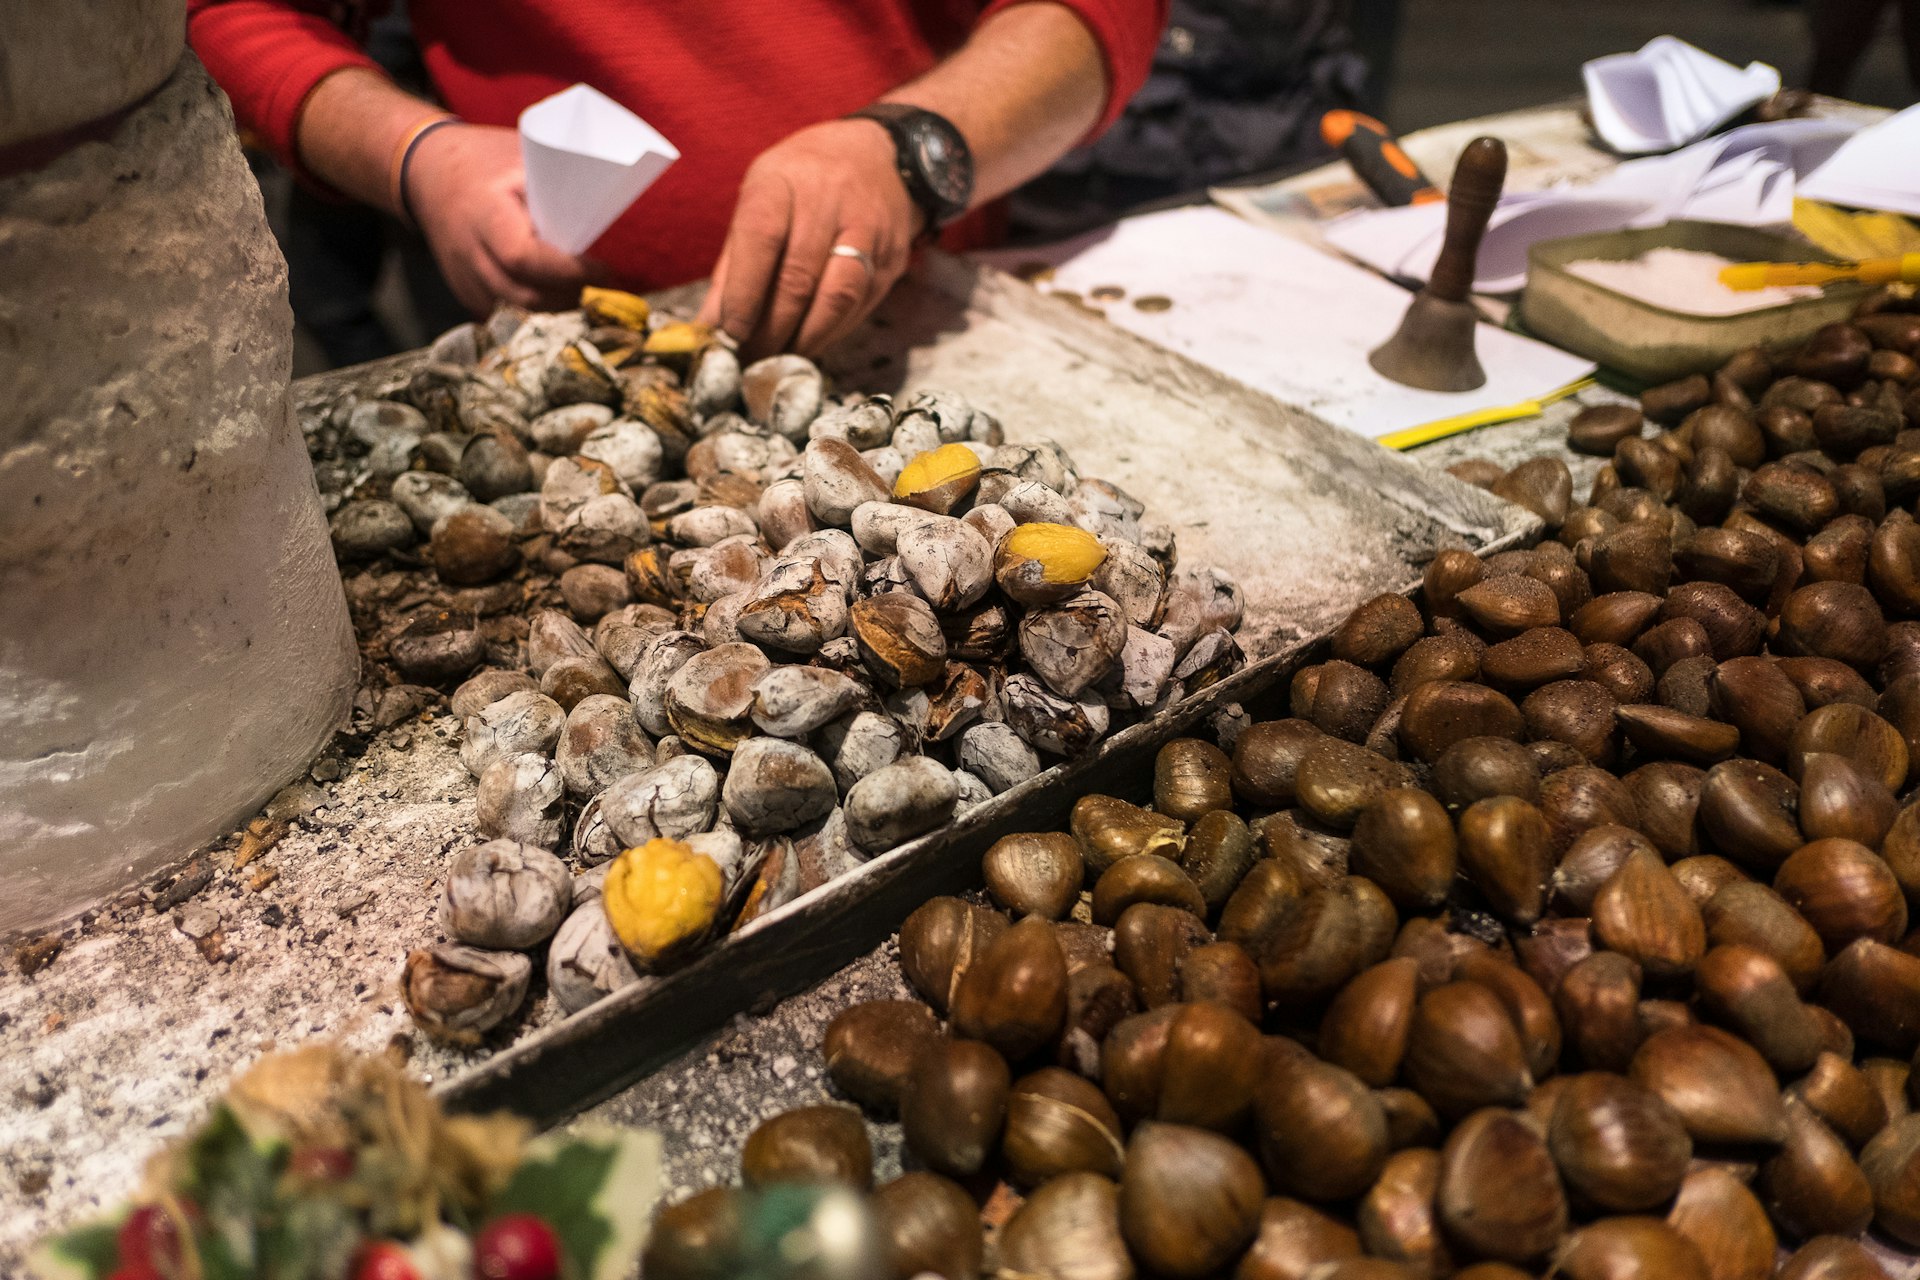 Chestnuts street roasting in Seville, Spain, during Christmastime